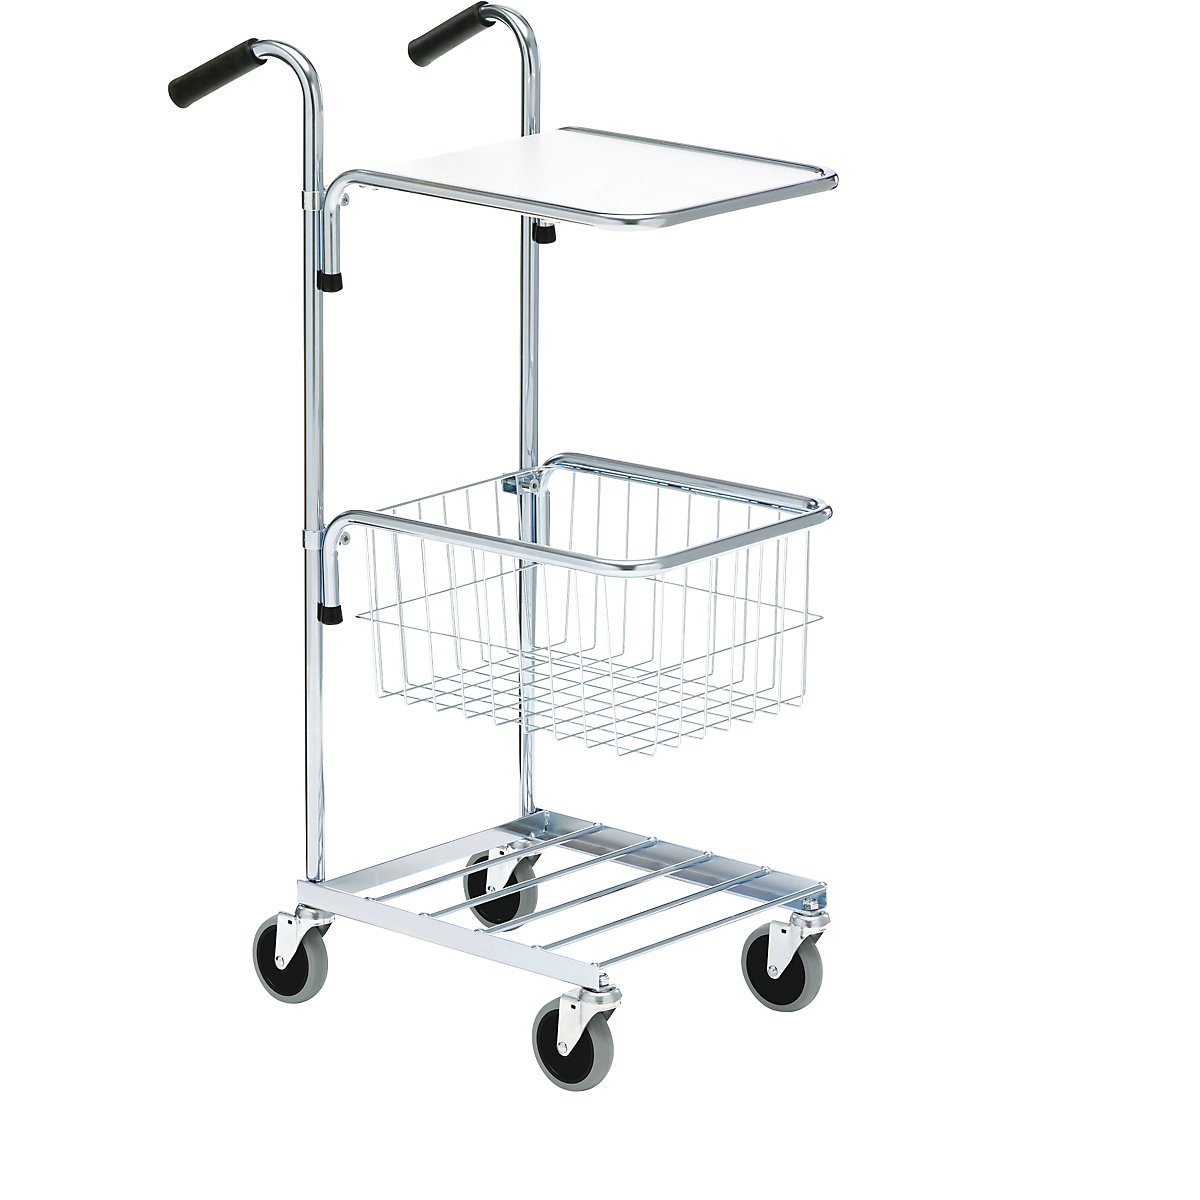 KOMPAKT retail bin – HelgeNyberg, 1 shelf, 1 basket, bright zinc plated frame, 5+ items-12